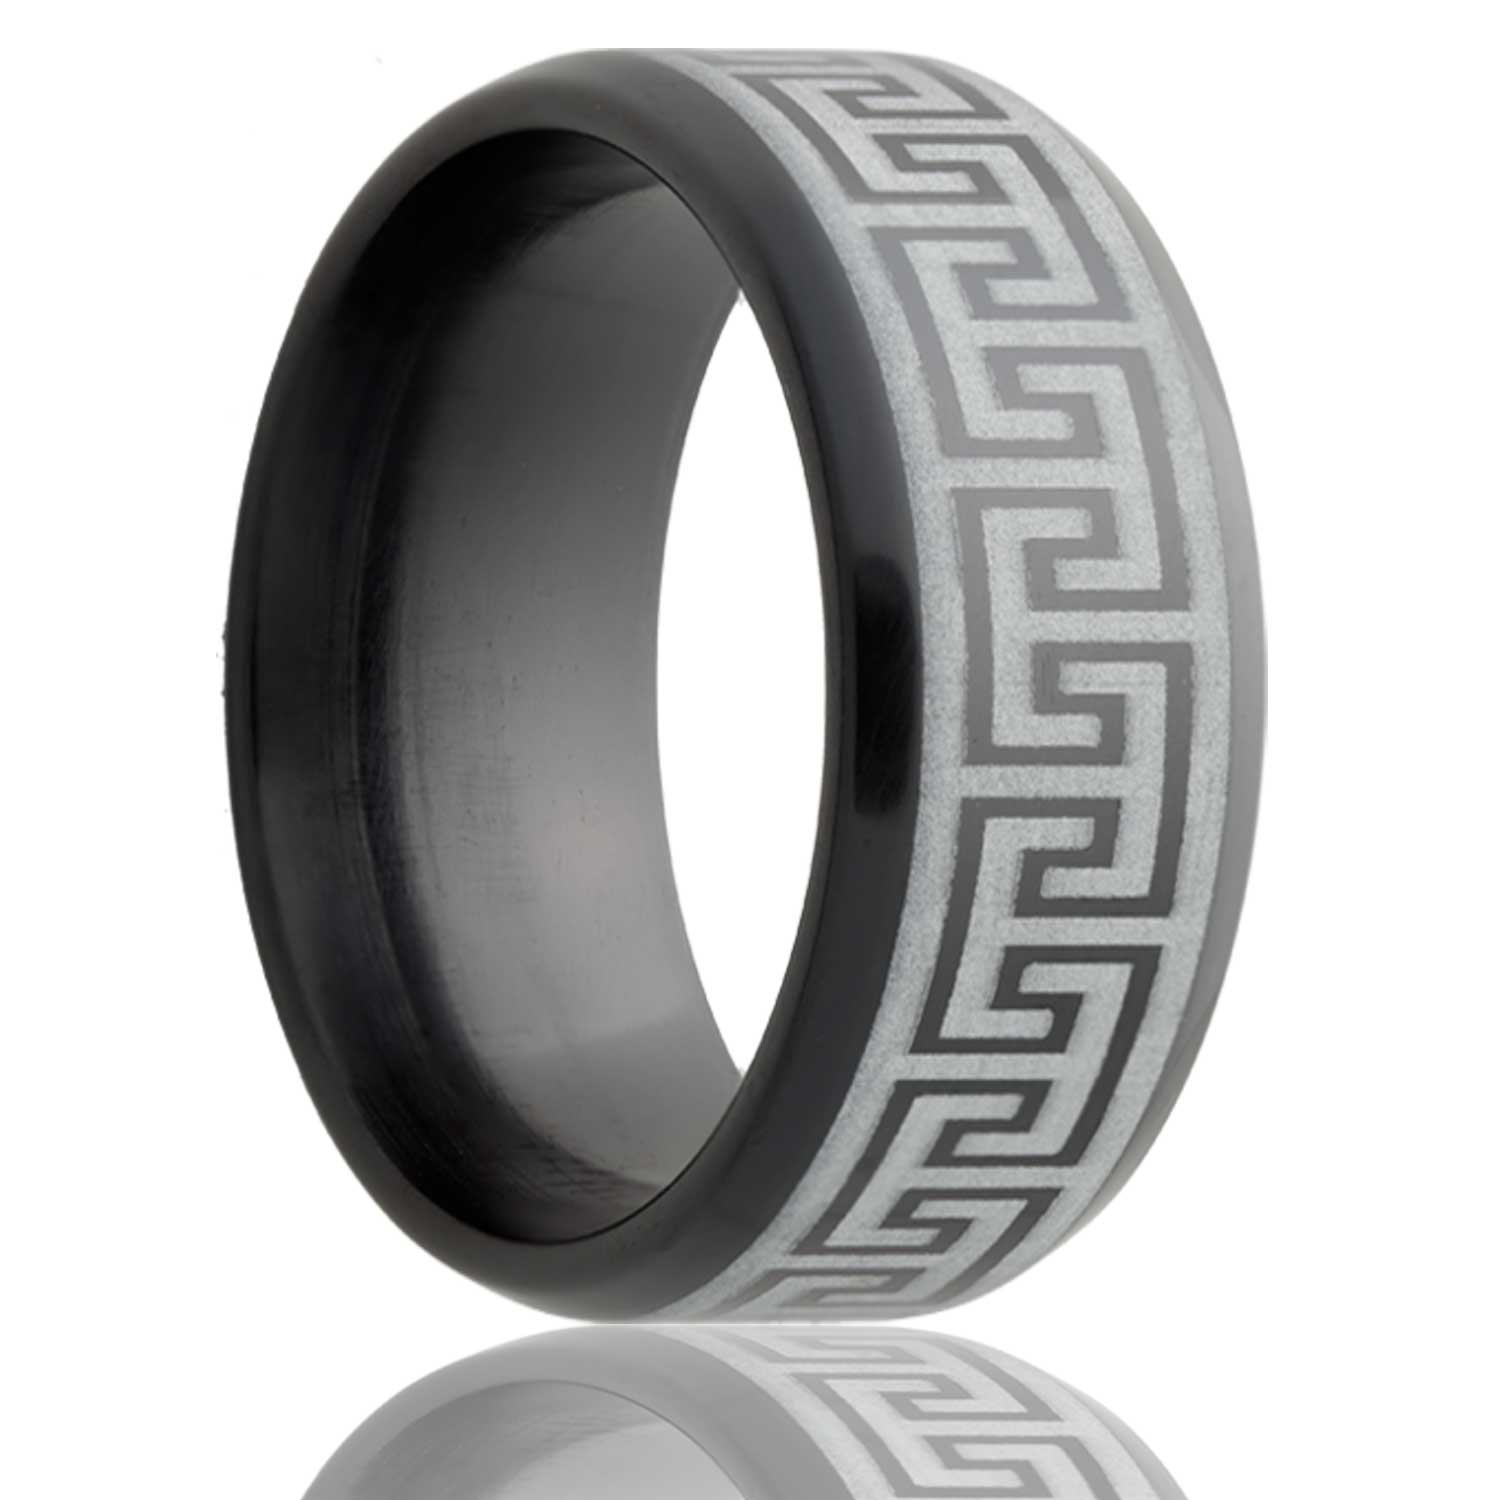 A greek key zirconium wedding band with beveled edges displayed on a neutral white background.